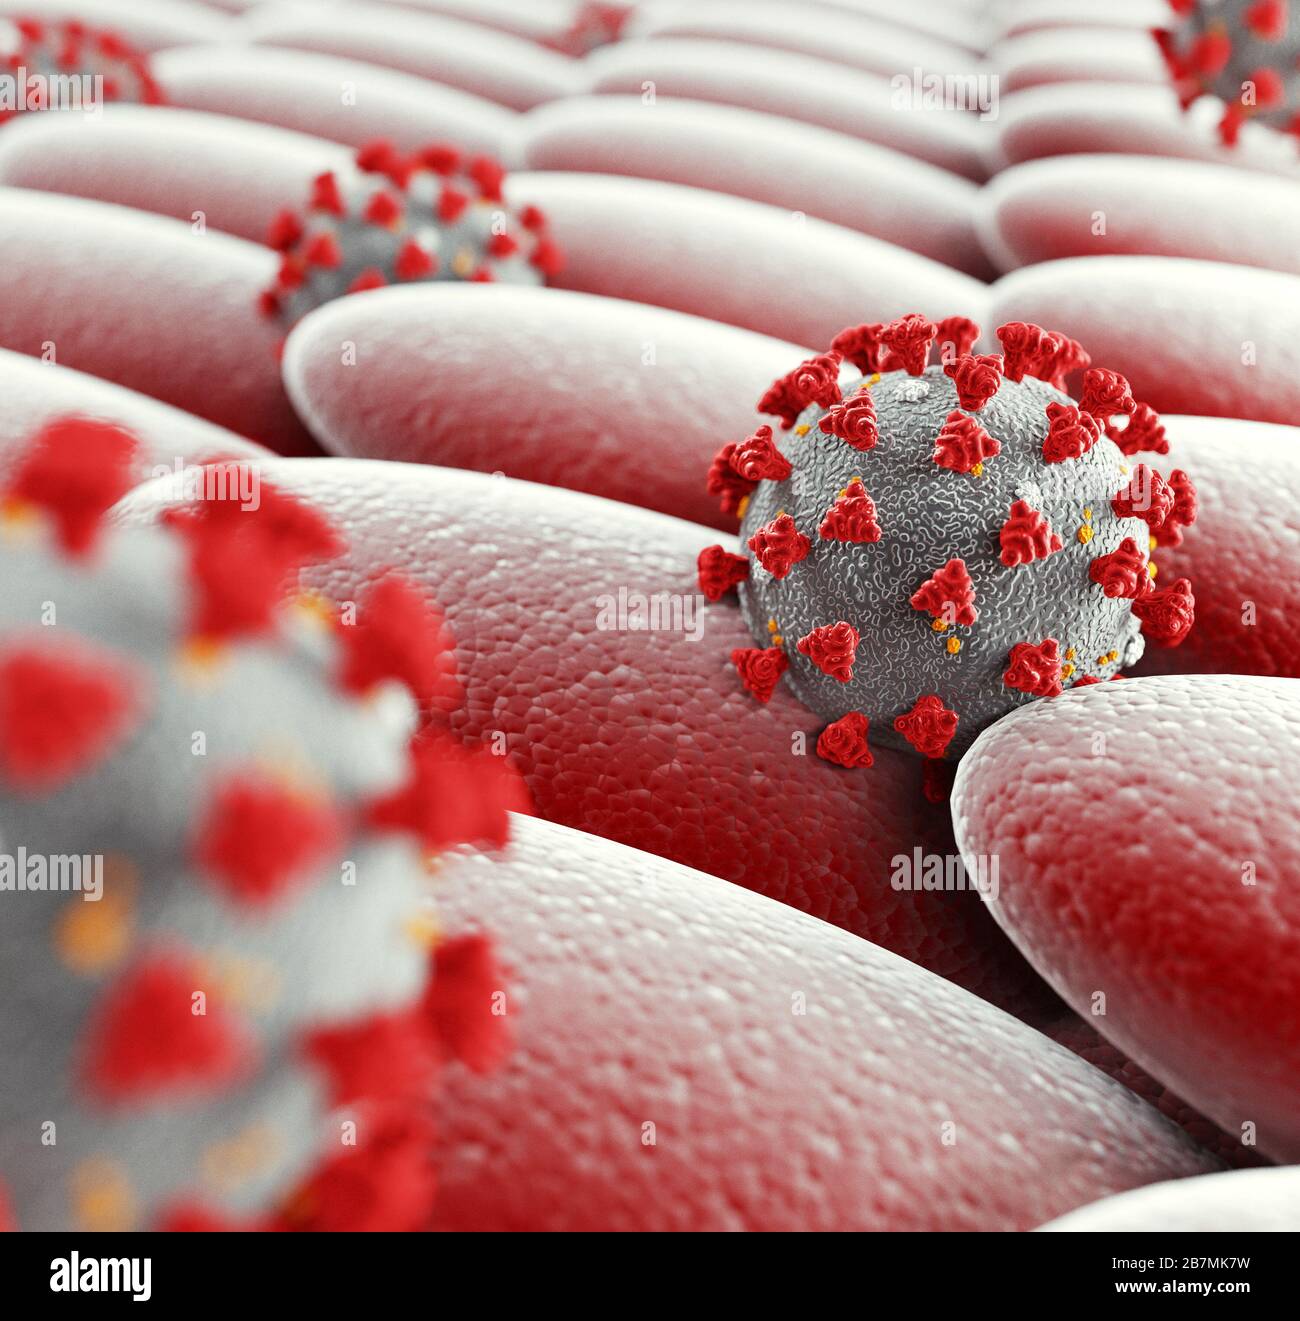 Coronavirus microscopic view. Respiratory System. Floating influenza virus cells. Pandemic risk concept. 3d rendering Stock Photo